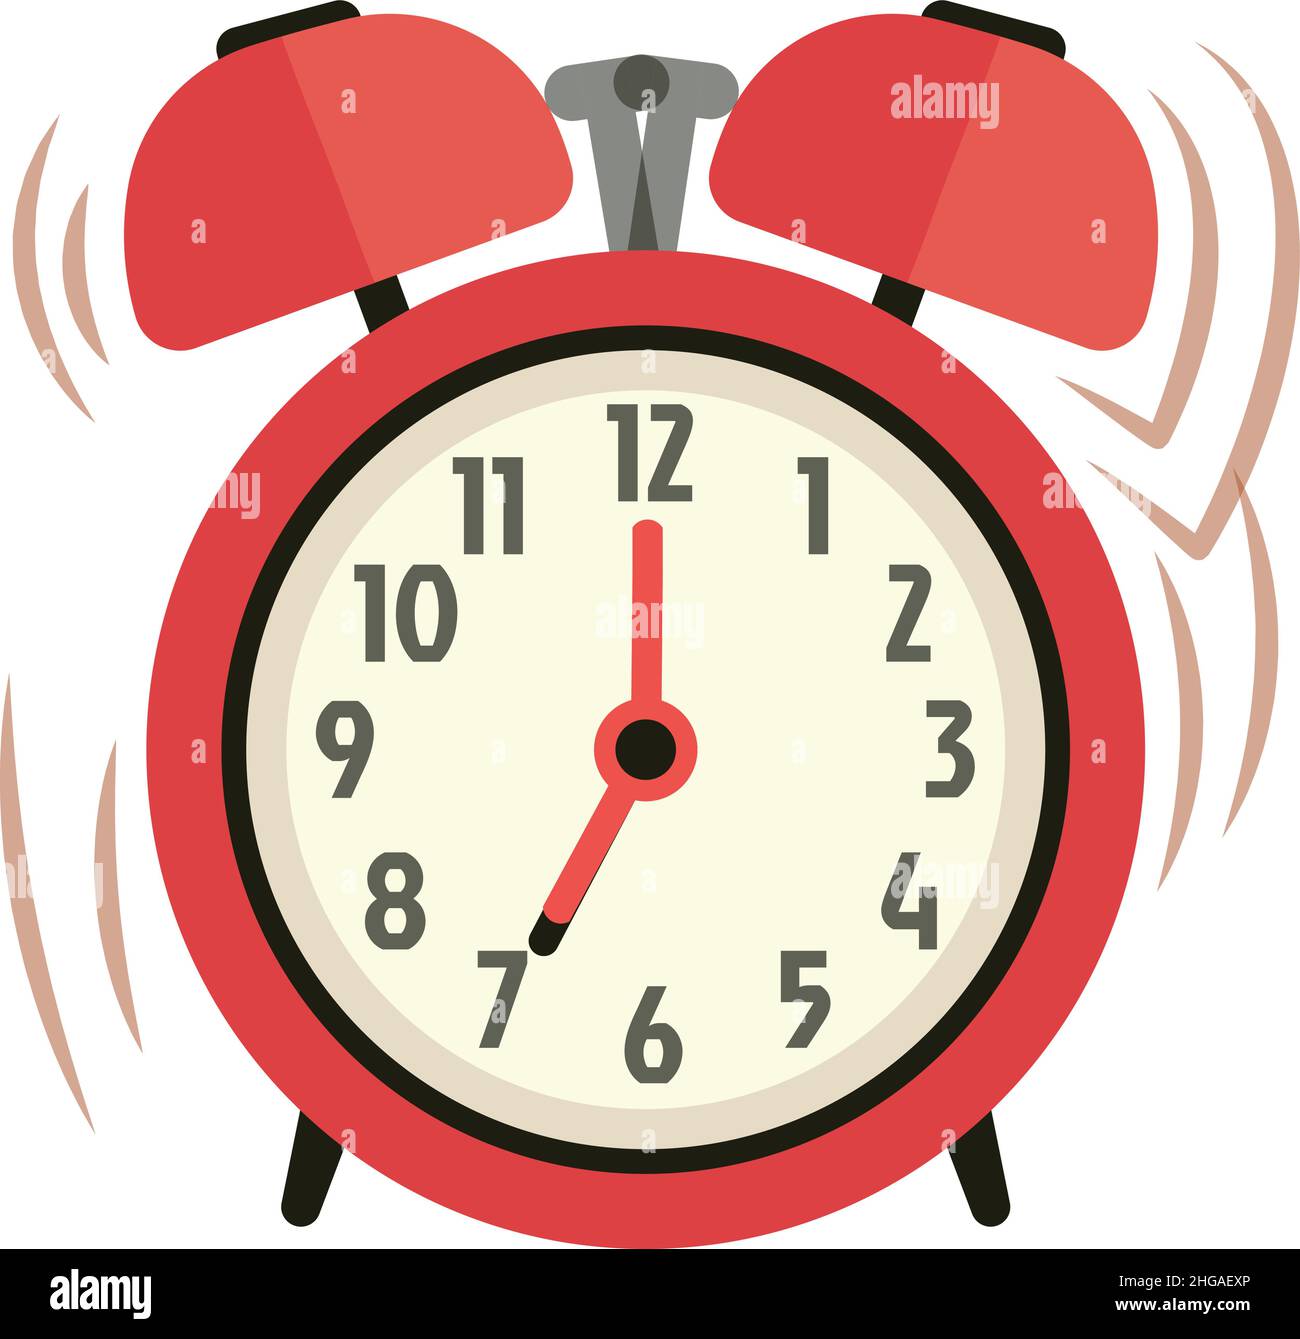 Ringing alarm clock icon. Wake up time symbol Stock Vector